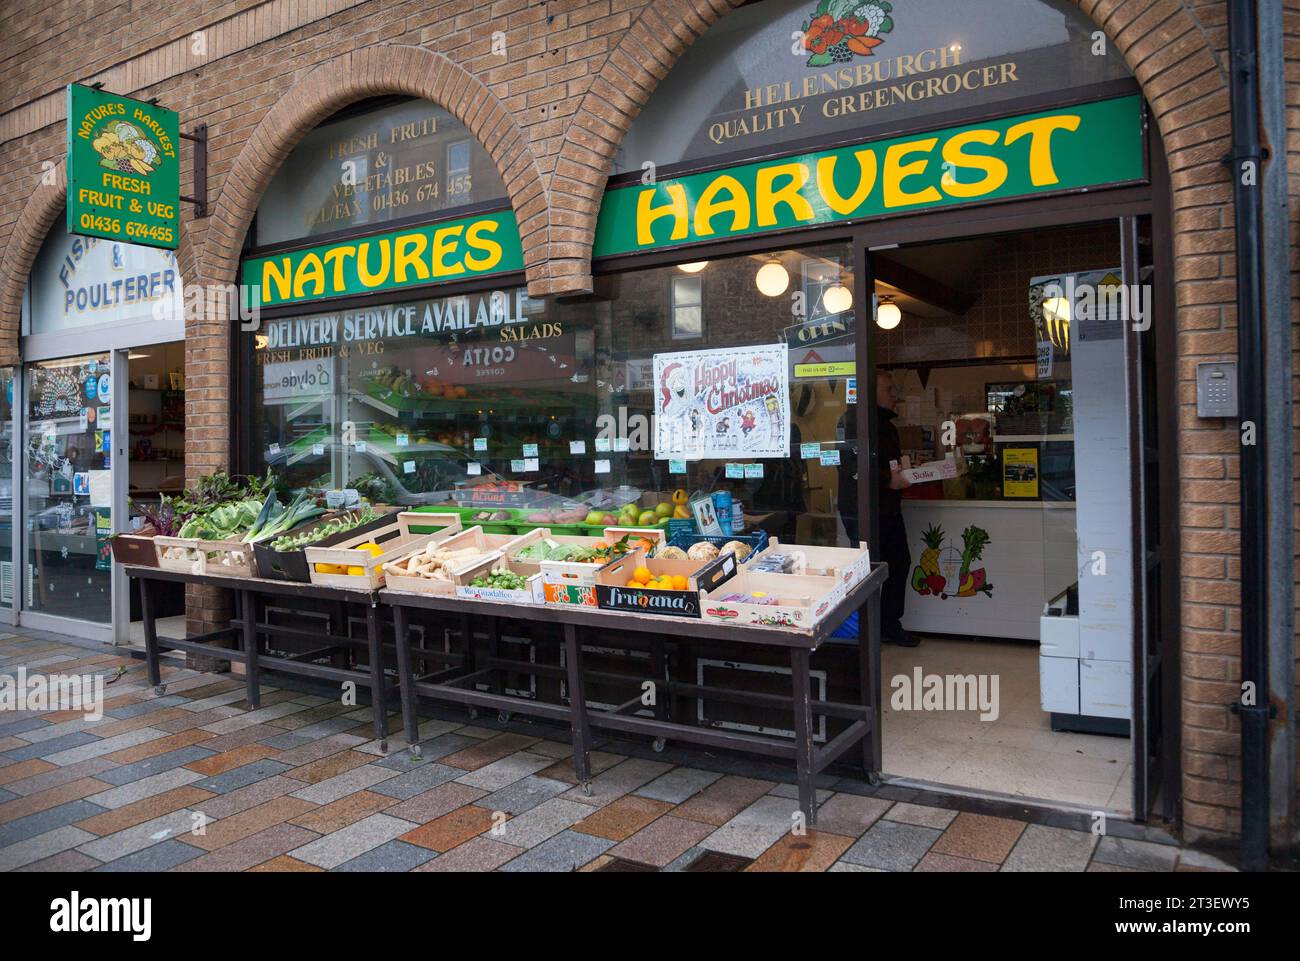 Natures Harvest - greengrocer on West Princes St, Helensburgh Stock Photo